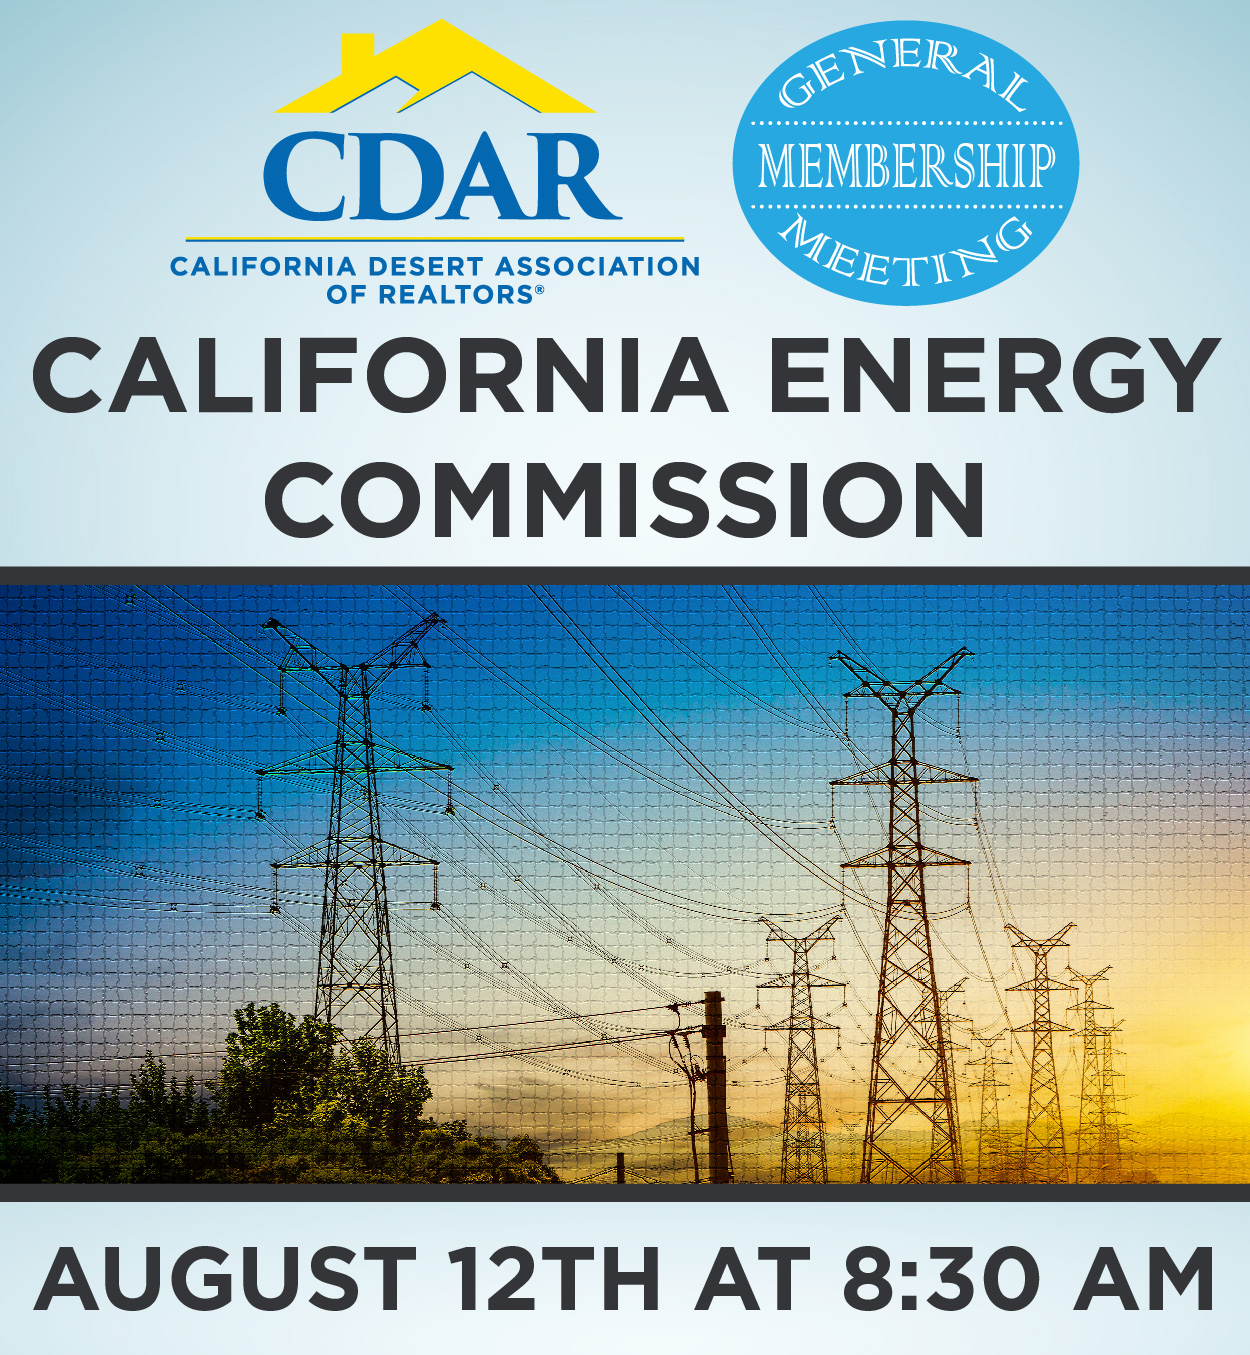 cdar-gmm-california-energy-commission-california-desert-association